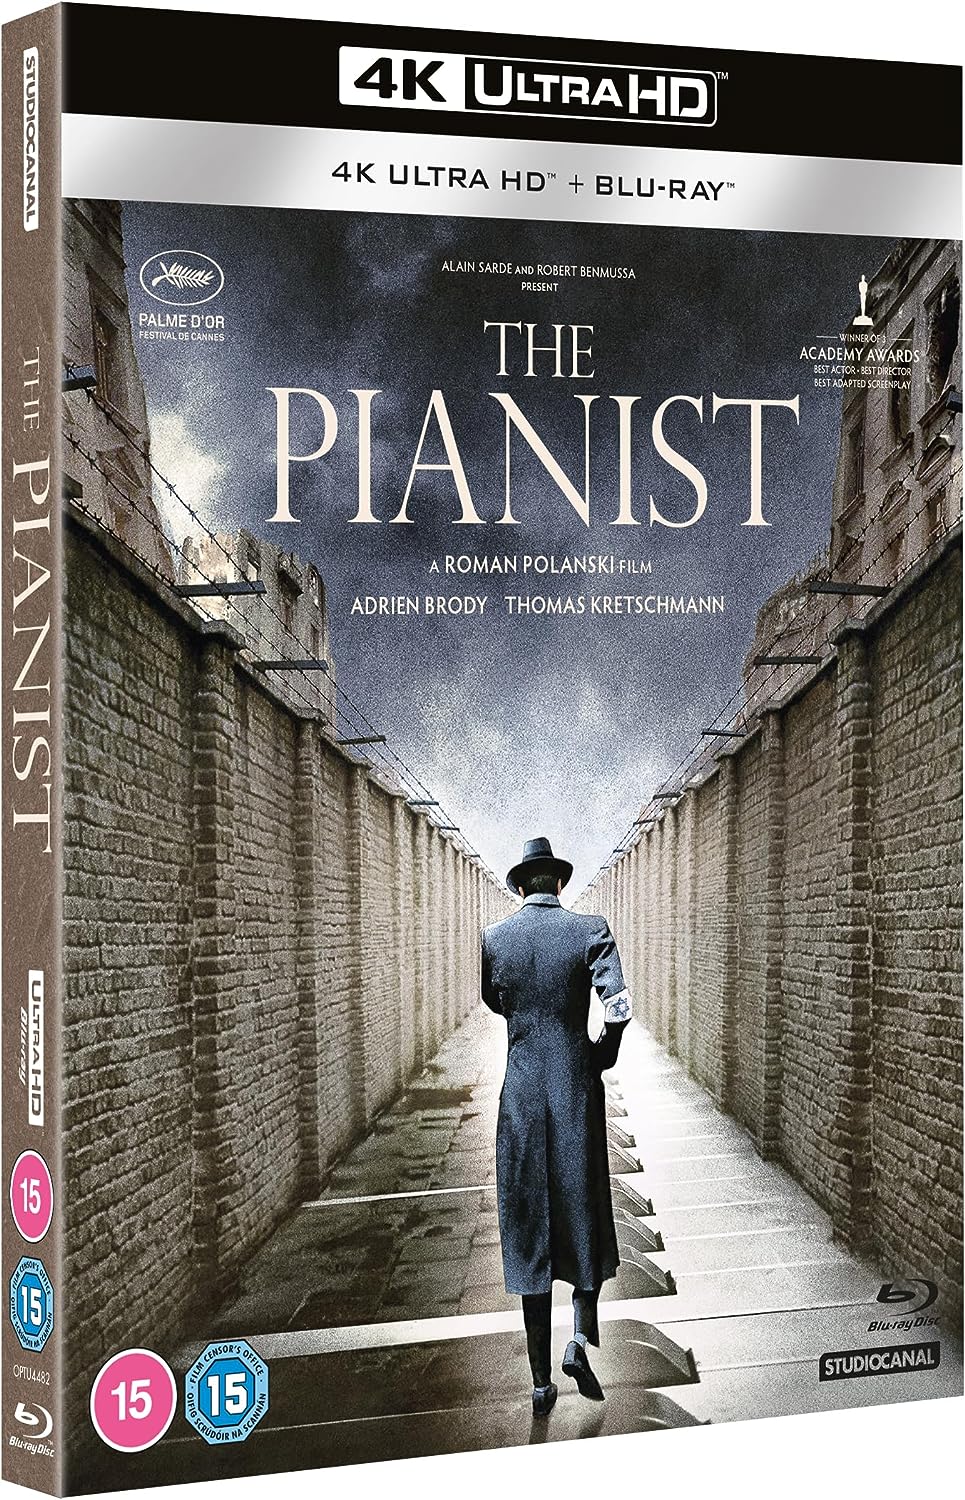 The Pianist 4K UHD + Blu-ray with Slipcover (StudioCanal UK/Region Free/B)